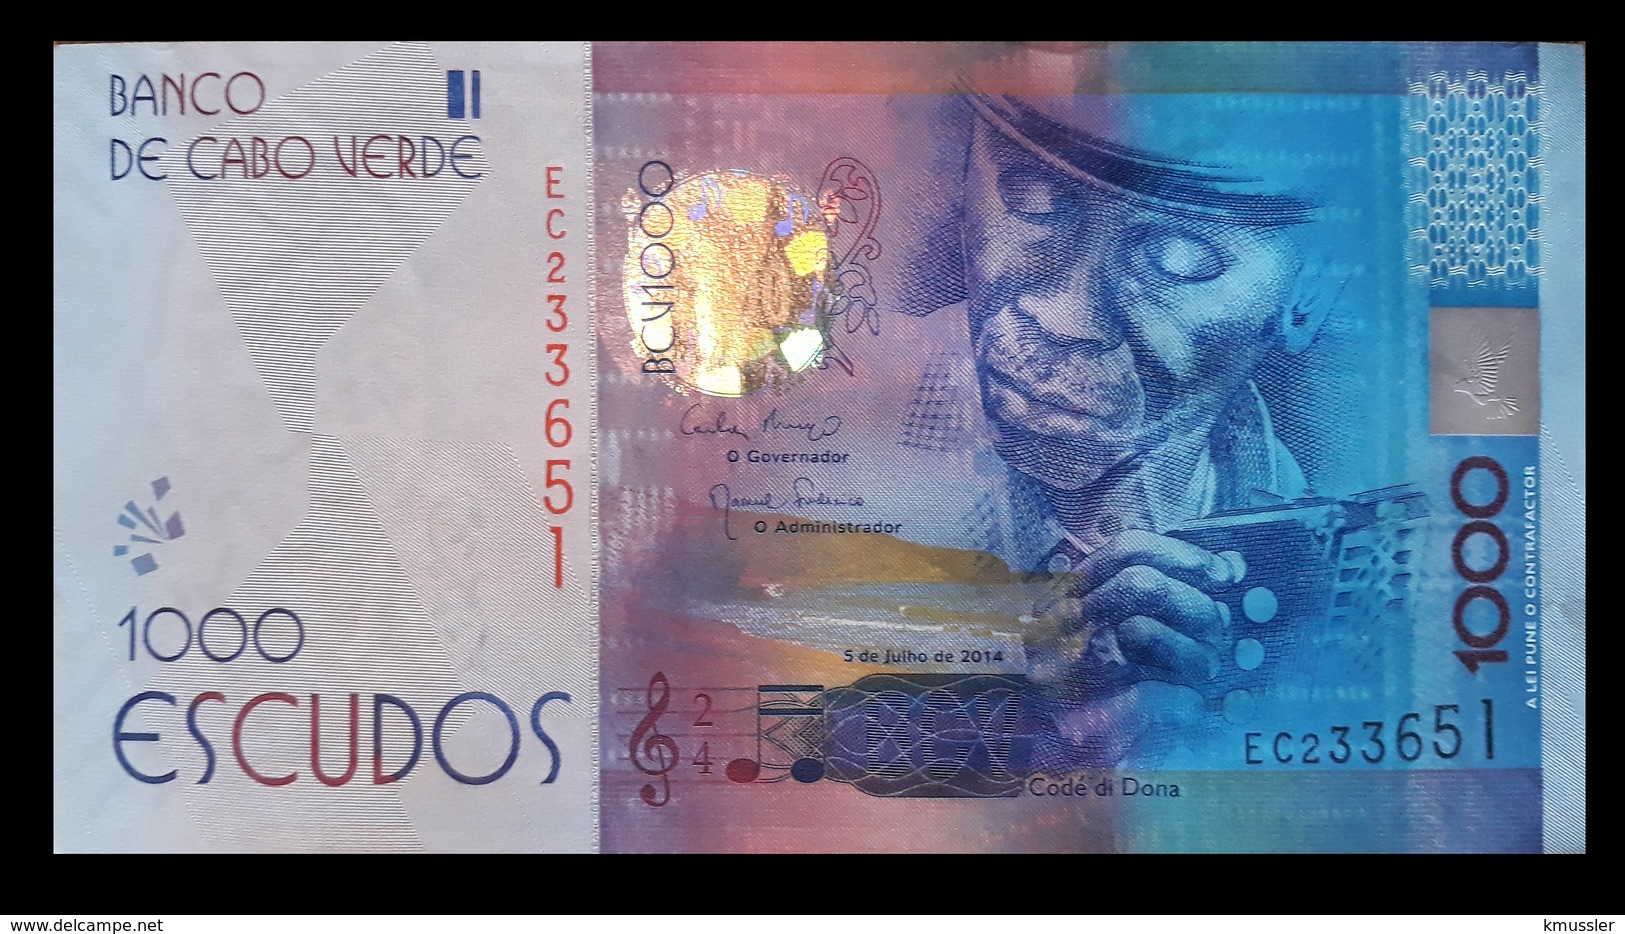 # # # Banknote Kap Verden (Cape Verde) 1.000 Escudos UNC # # # - Capo Verde